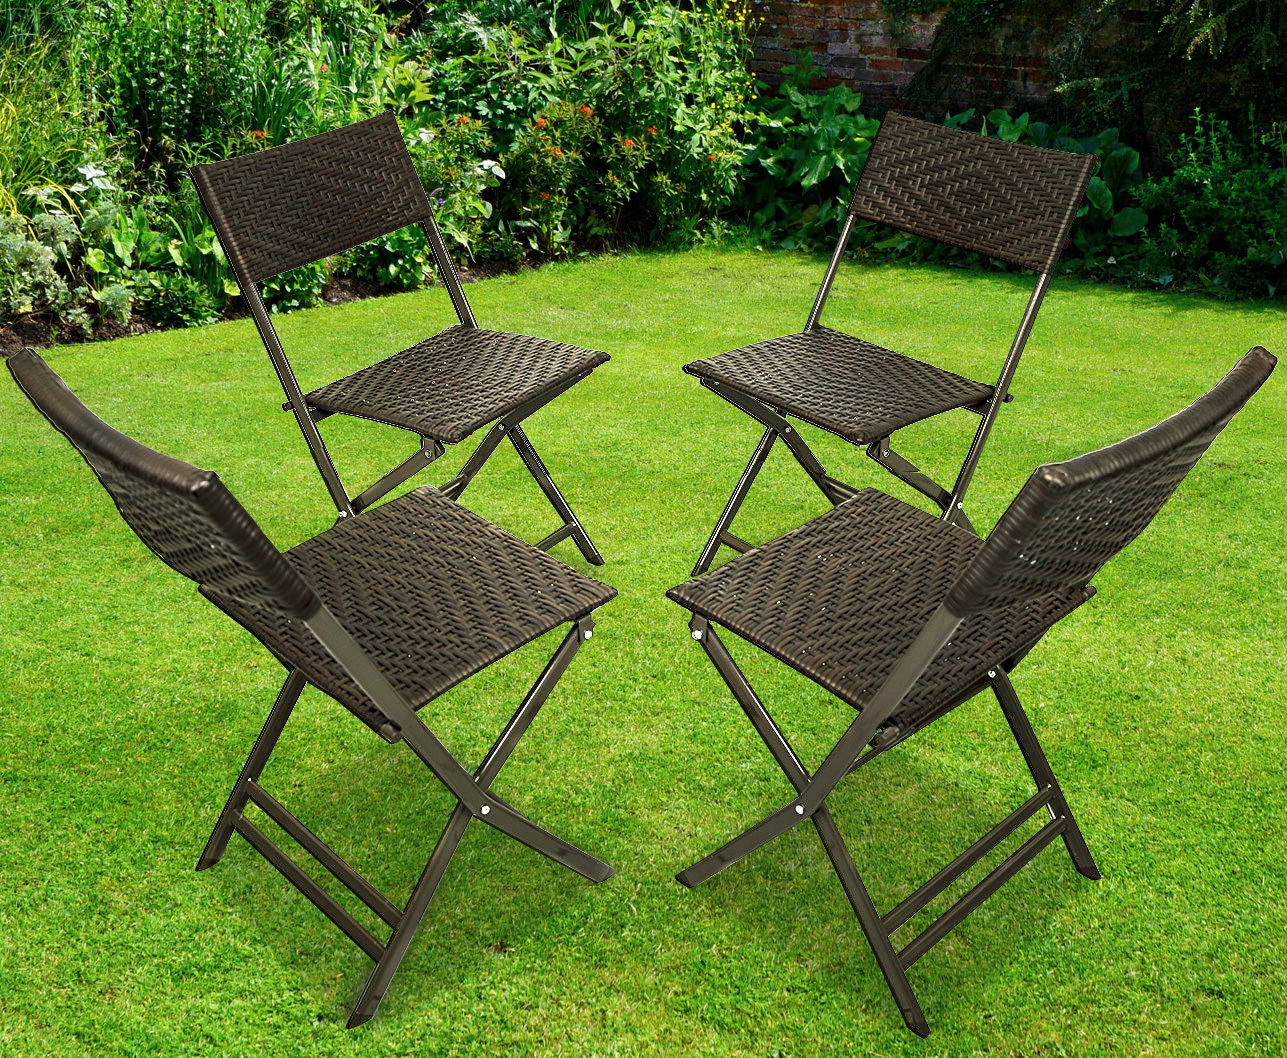 4 x Alfresco Rattan Wicker Folding Outdoor Chairs